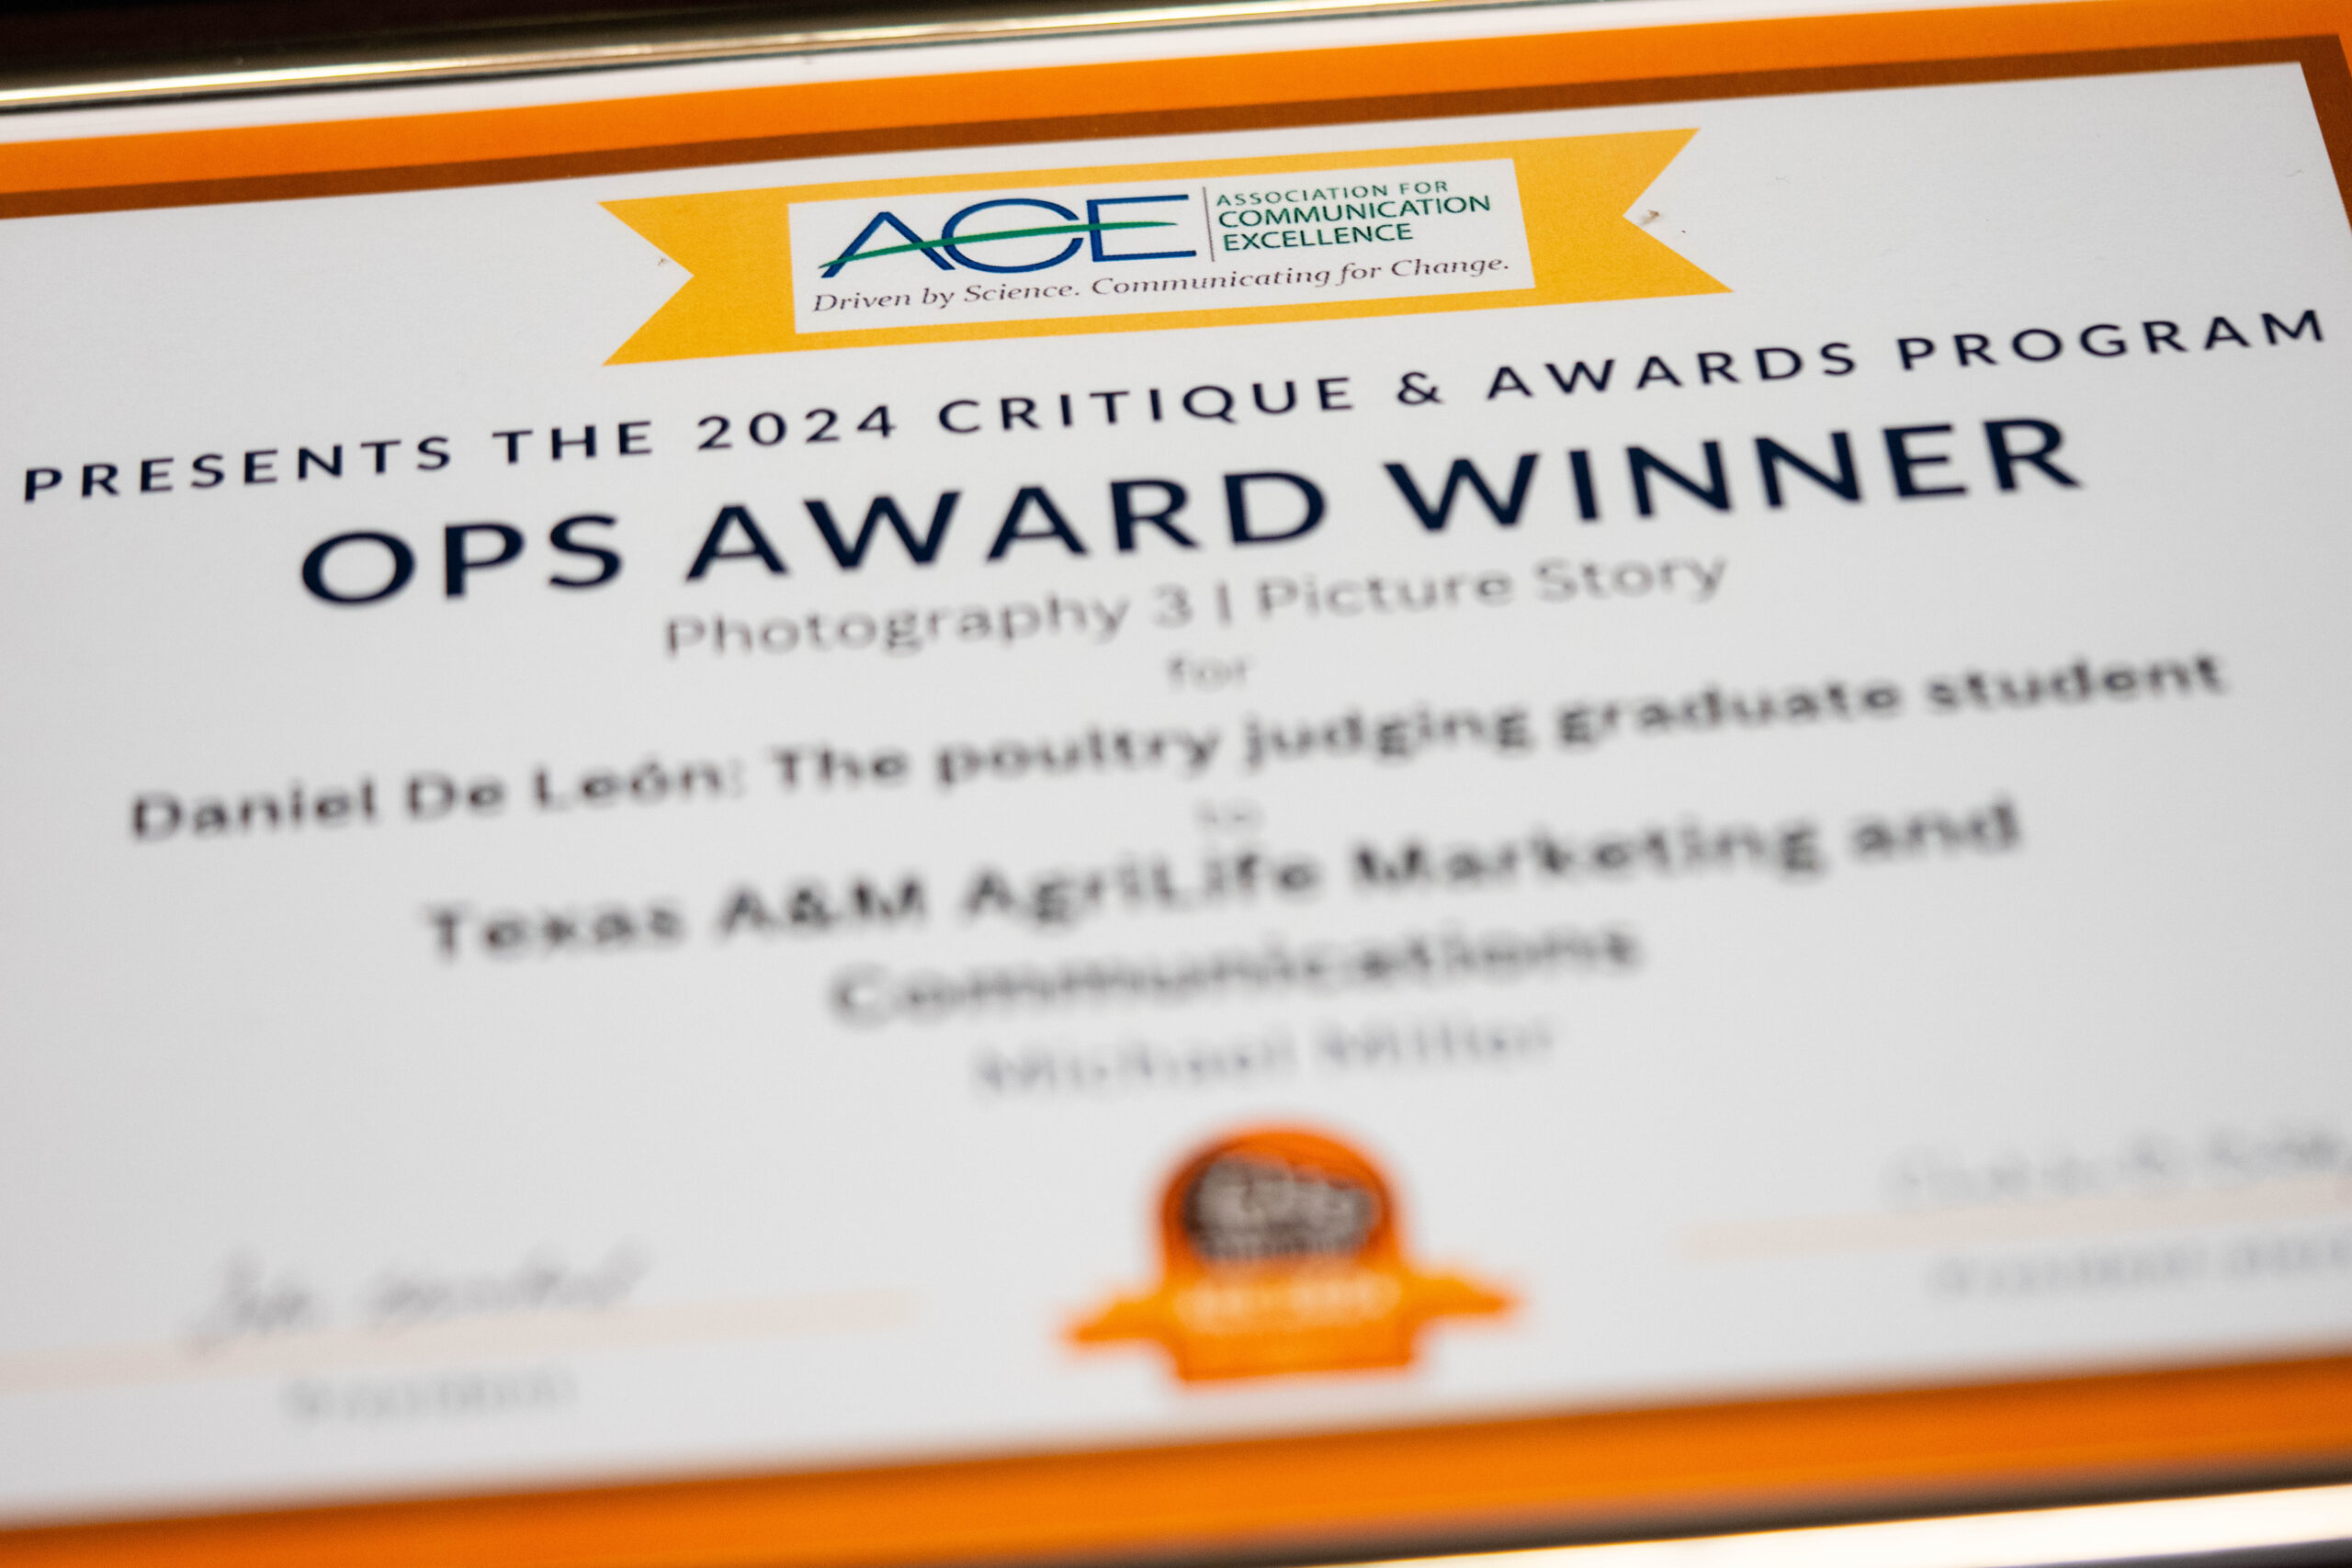 Texas A&M AgriLife communicators receive national awards